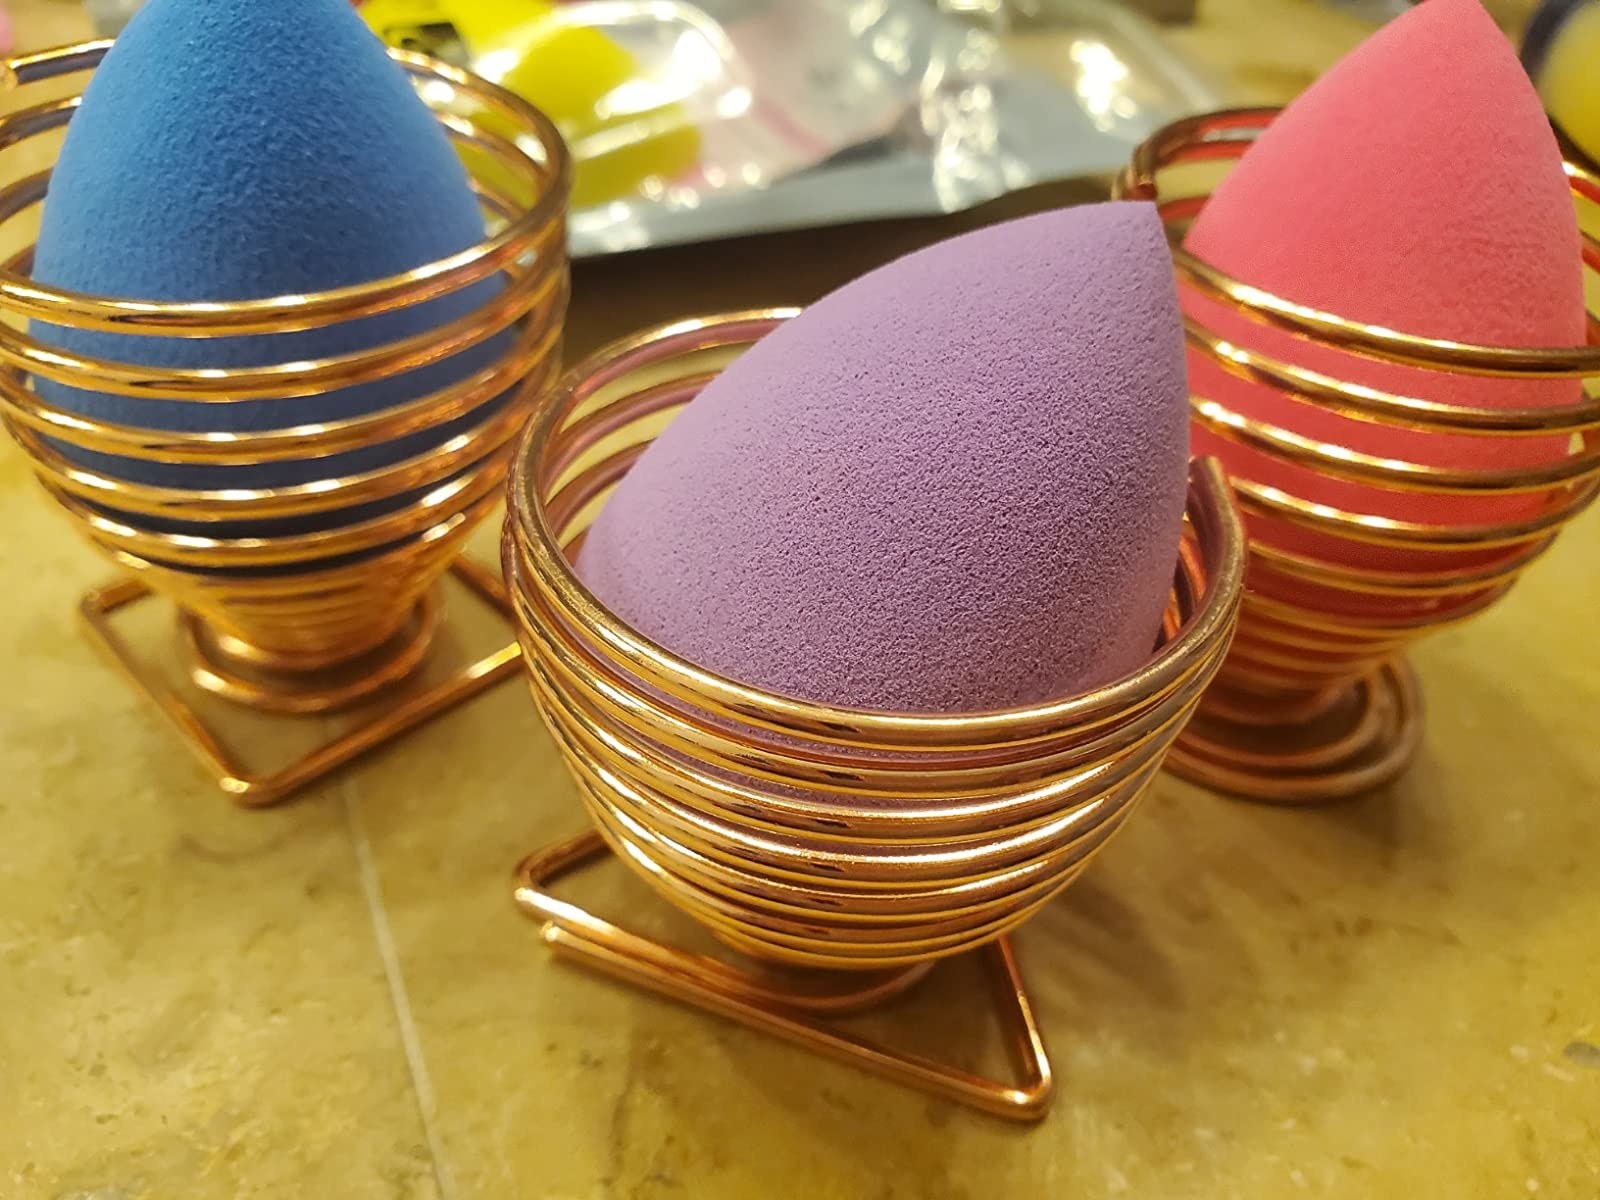 three multi-colored makeup sponges in display cups